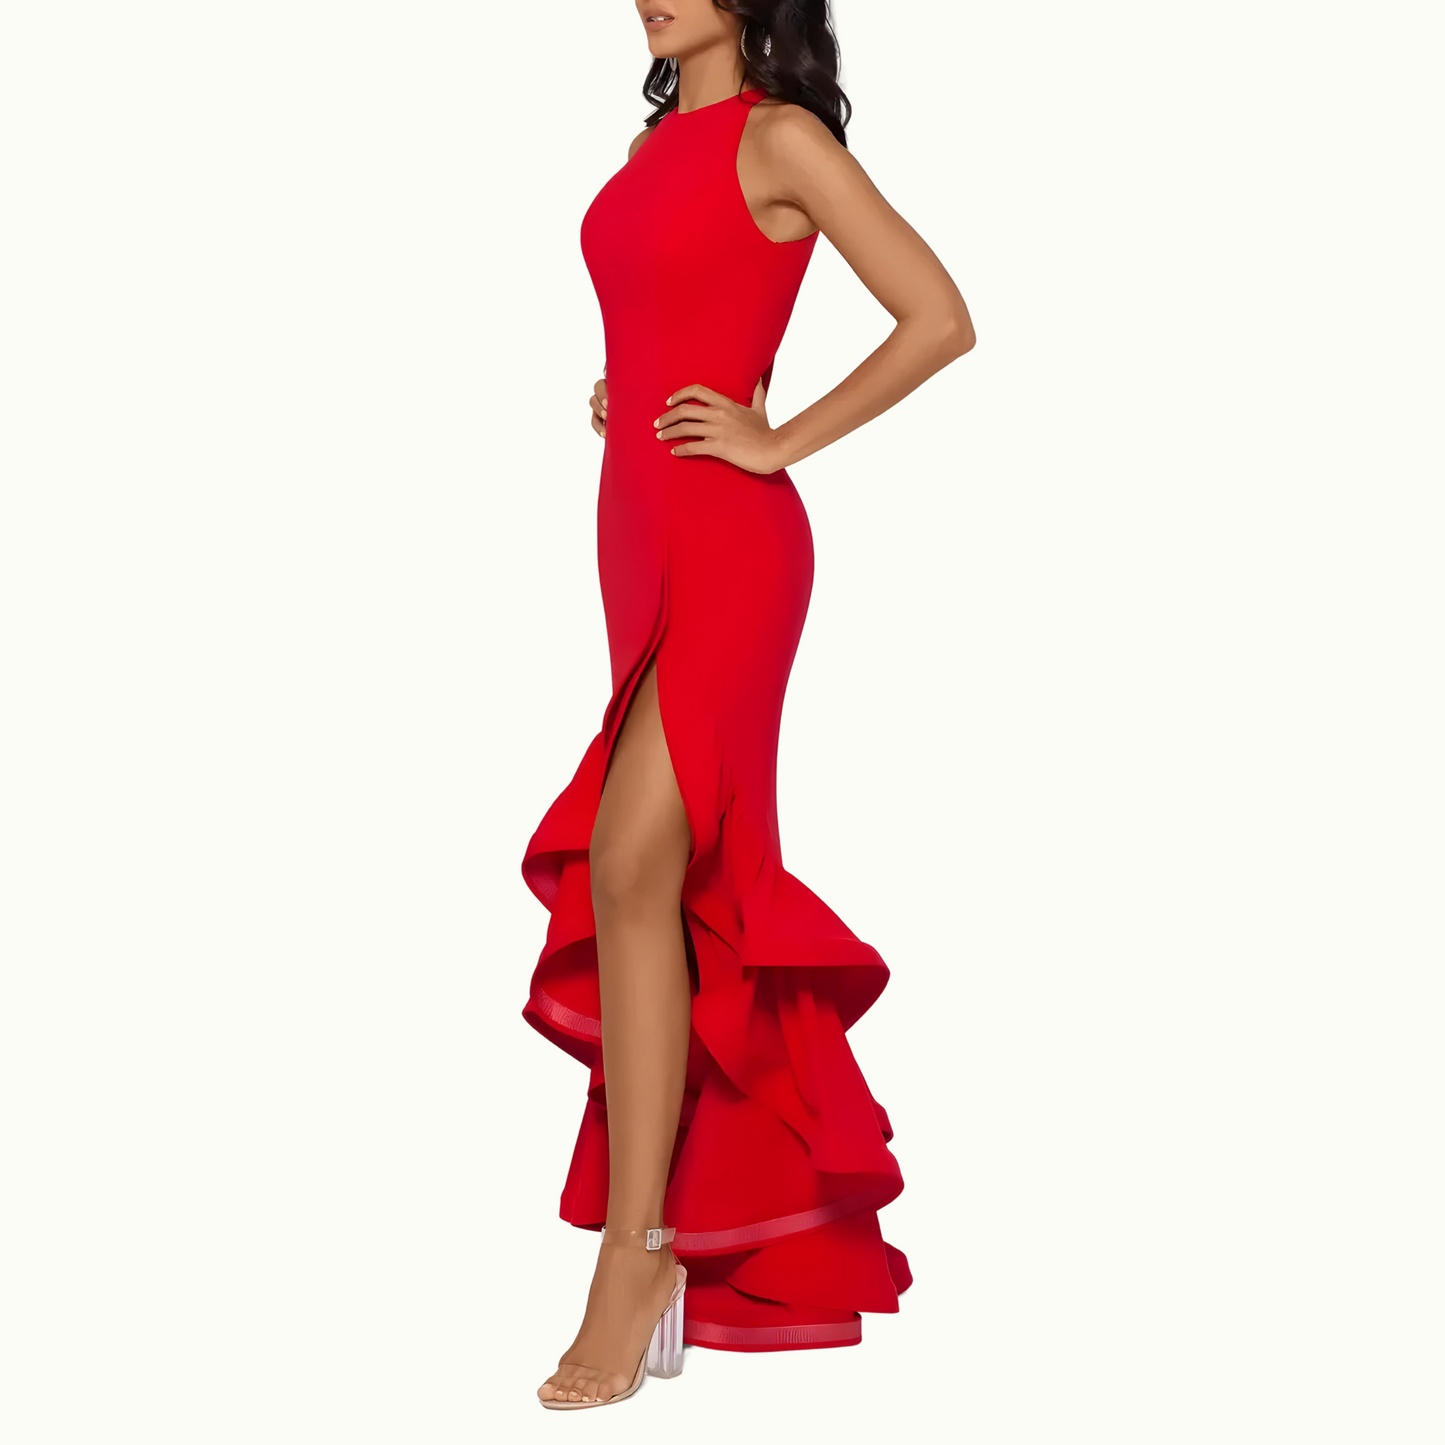 Flamenco Flame: Set the Stage on Fire, dress